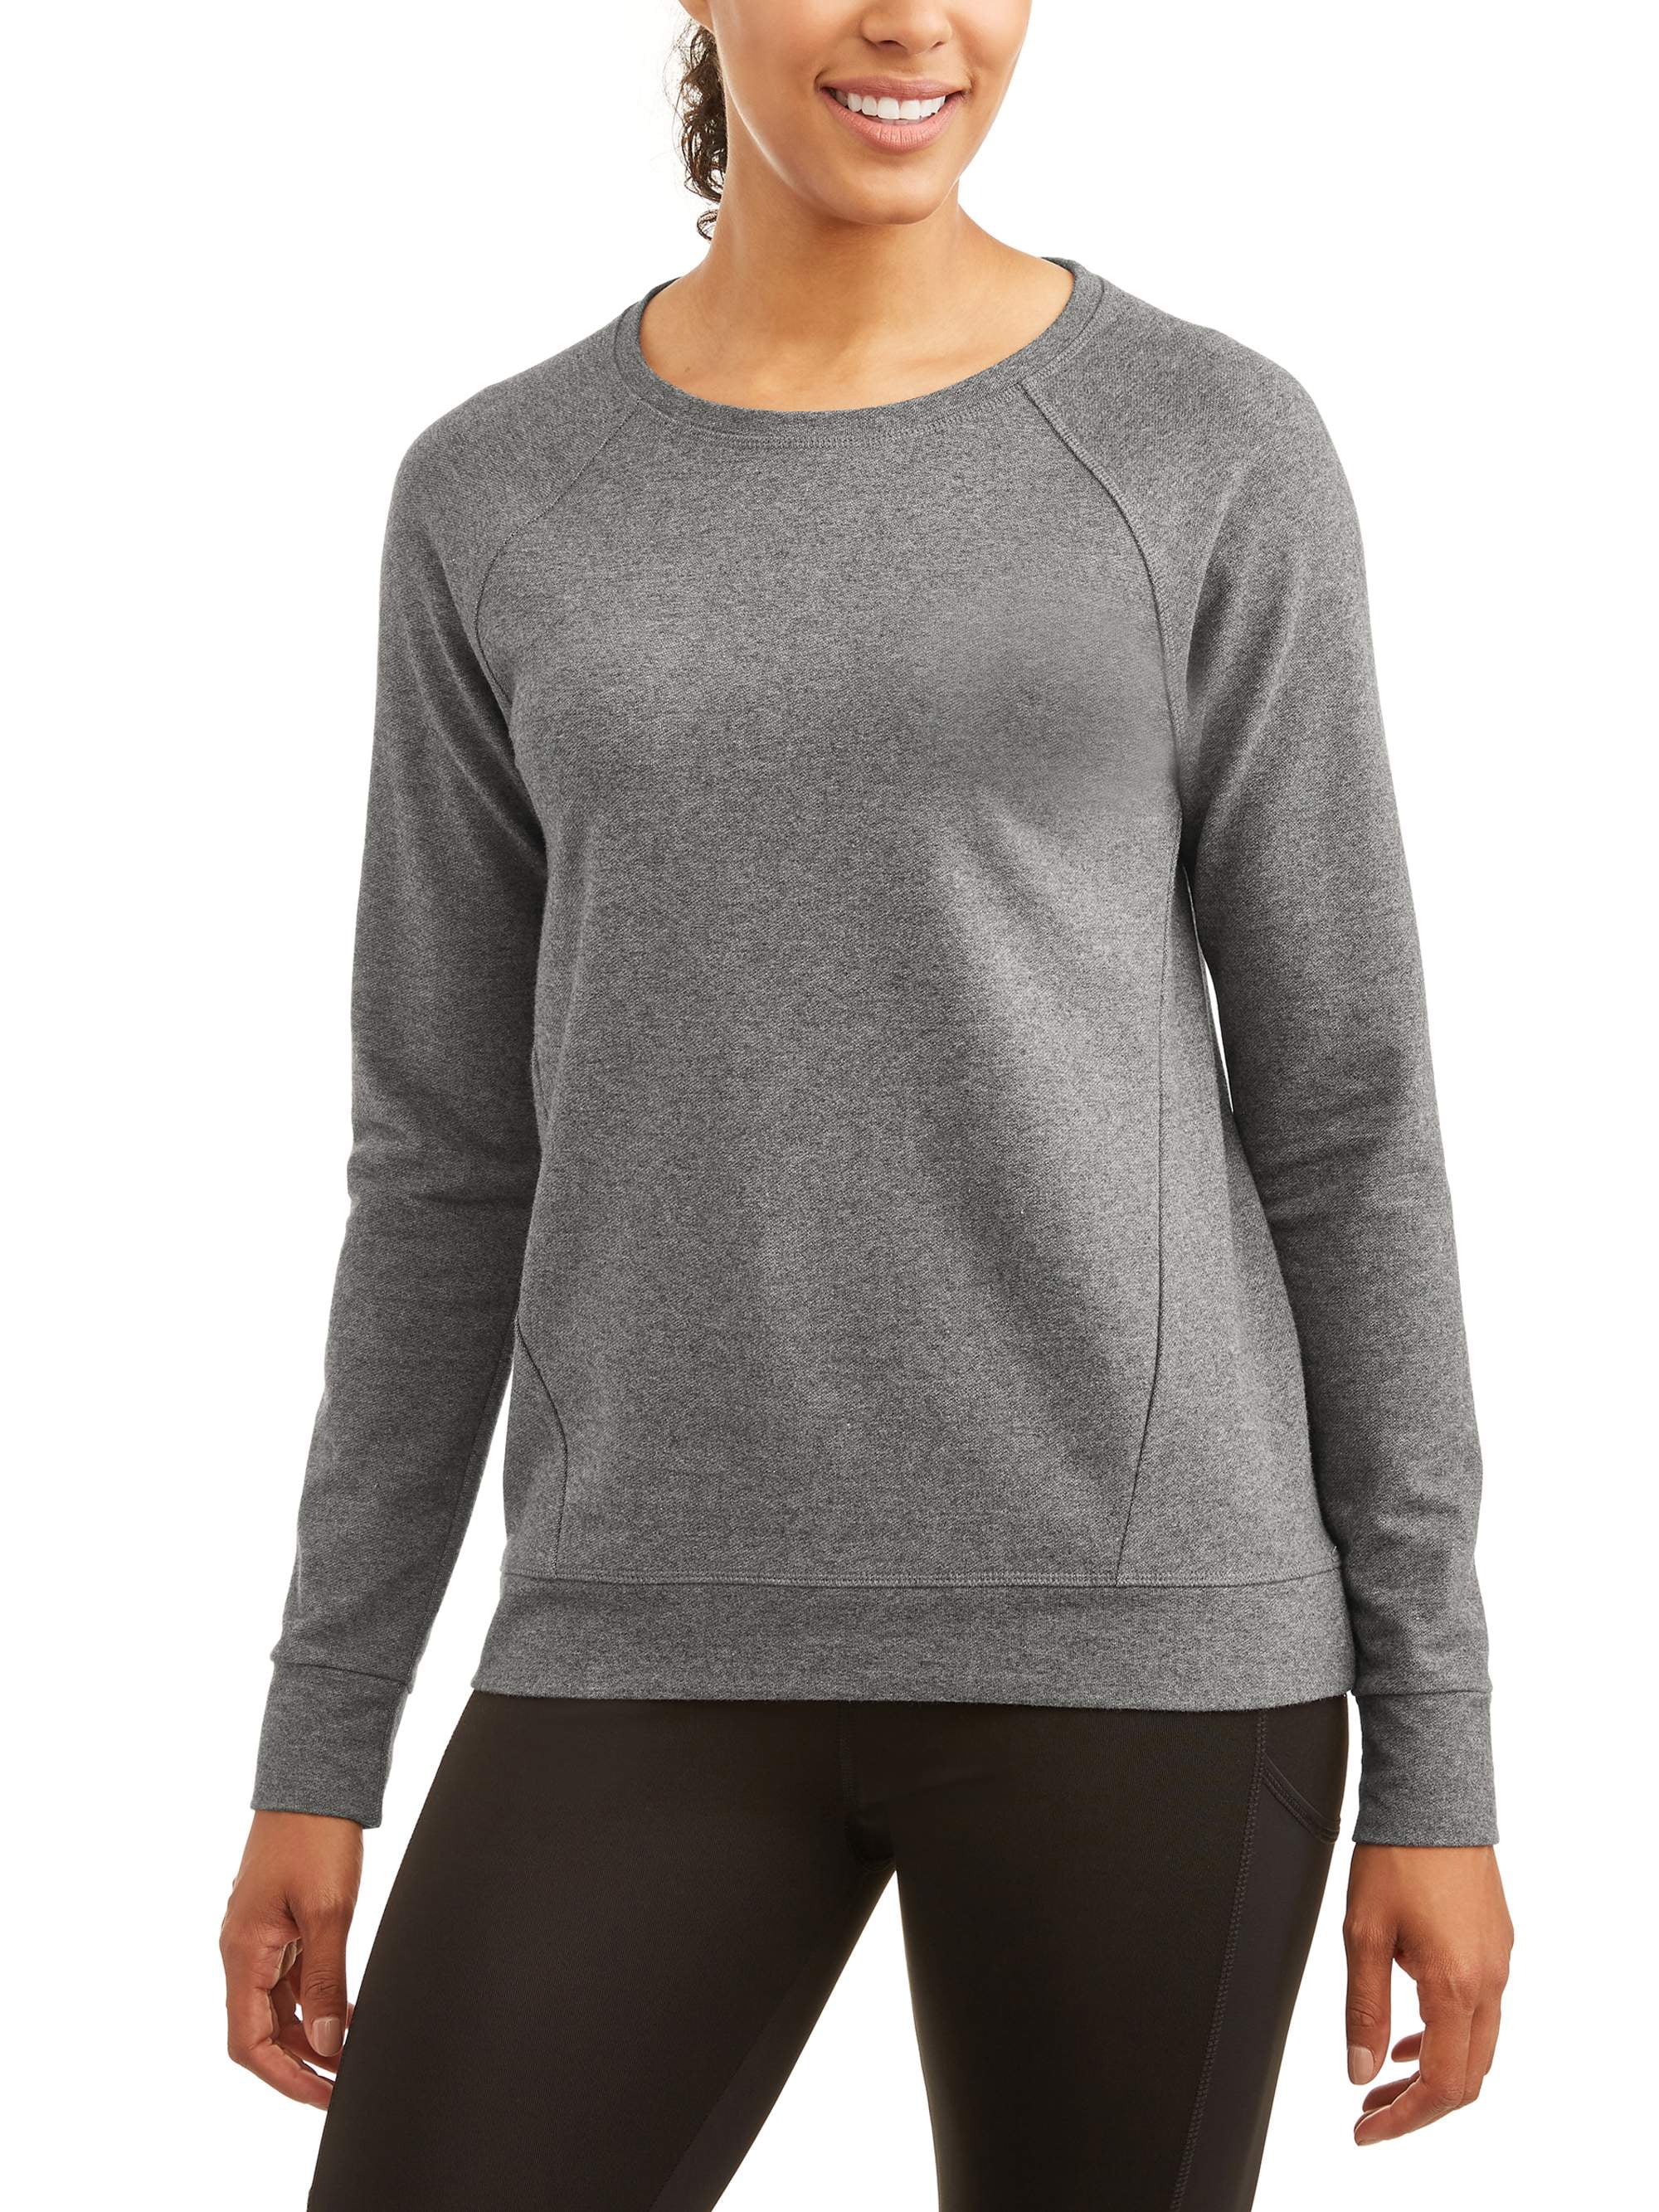 Athletic Works Women's Essential Crewneck Sweatshirt - Walmart.com